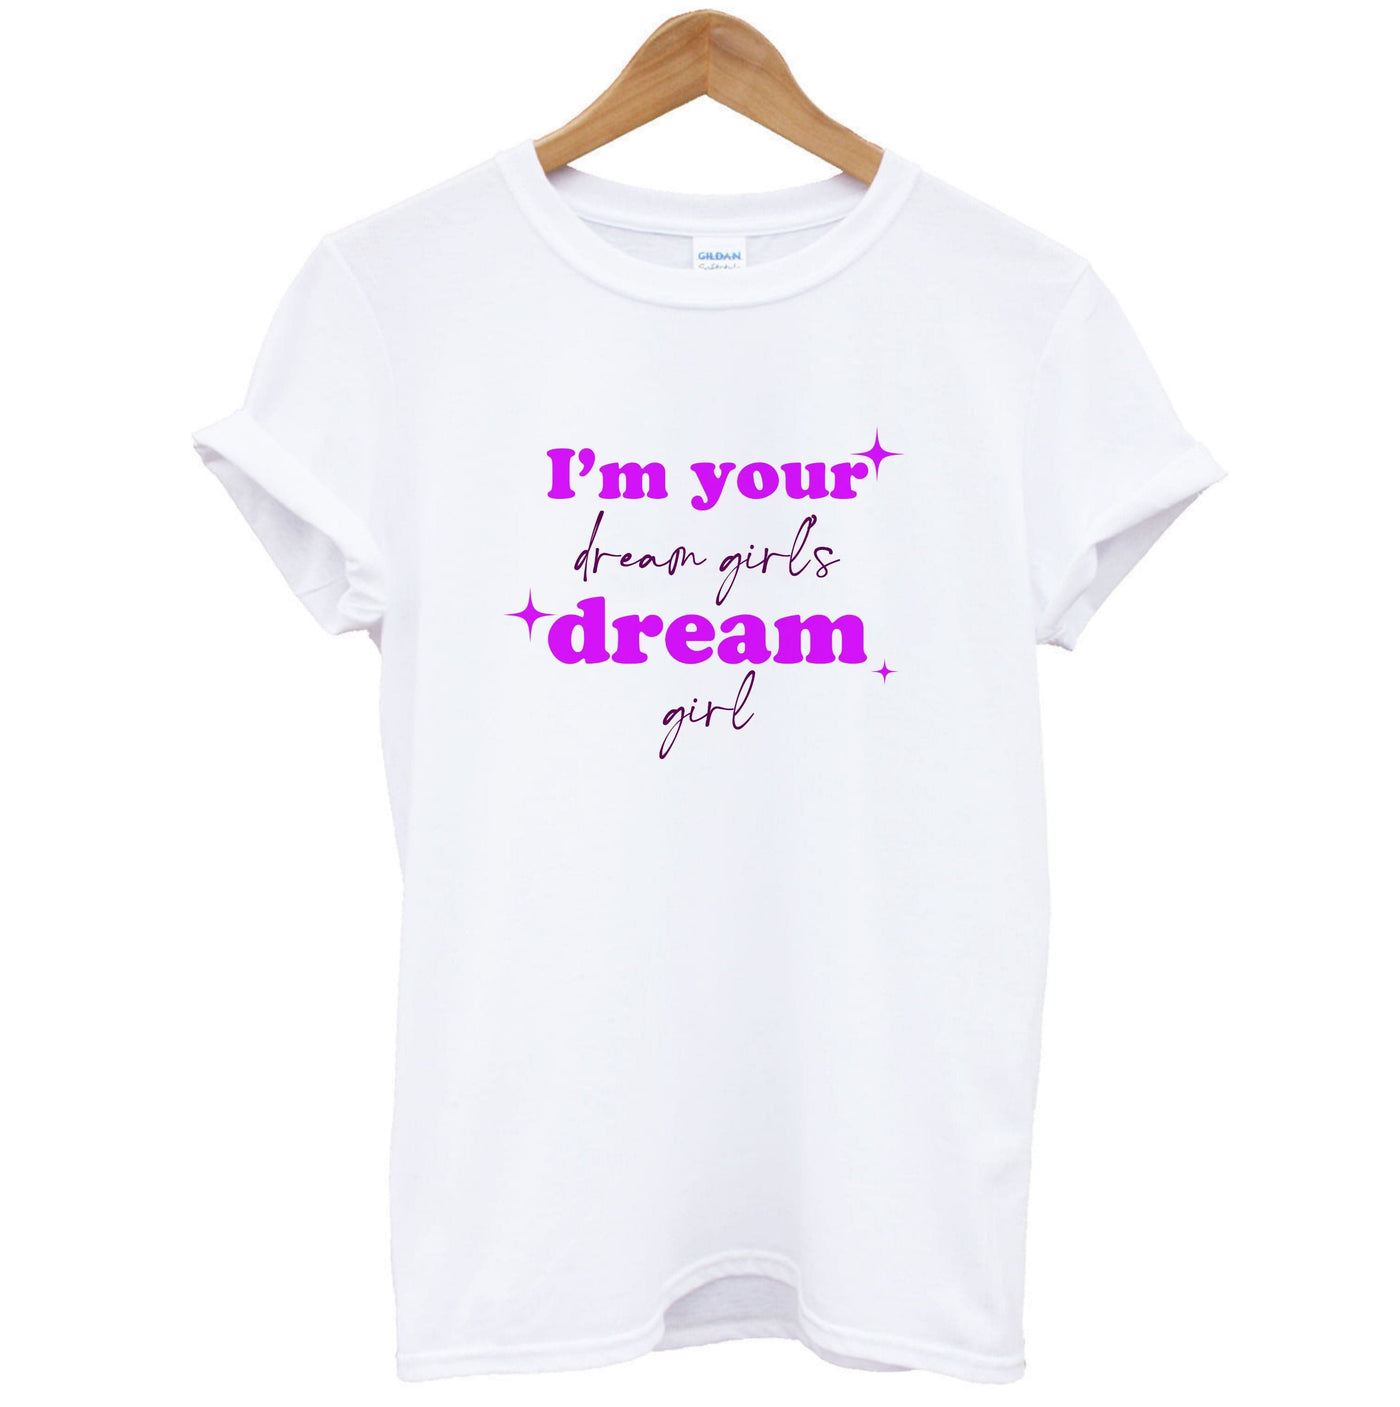 I'm Your Dream Girls Dream Girl - Chappell Roan T-Shirt